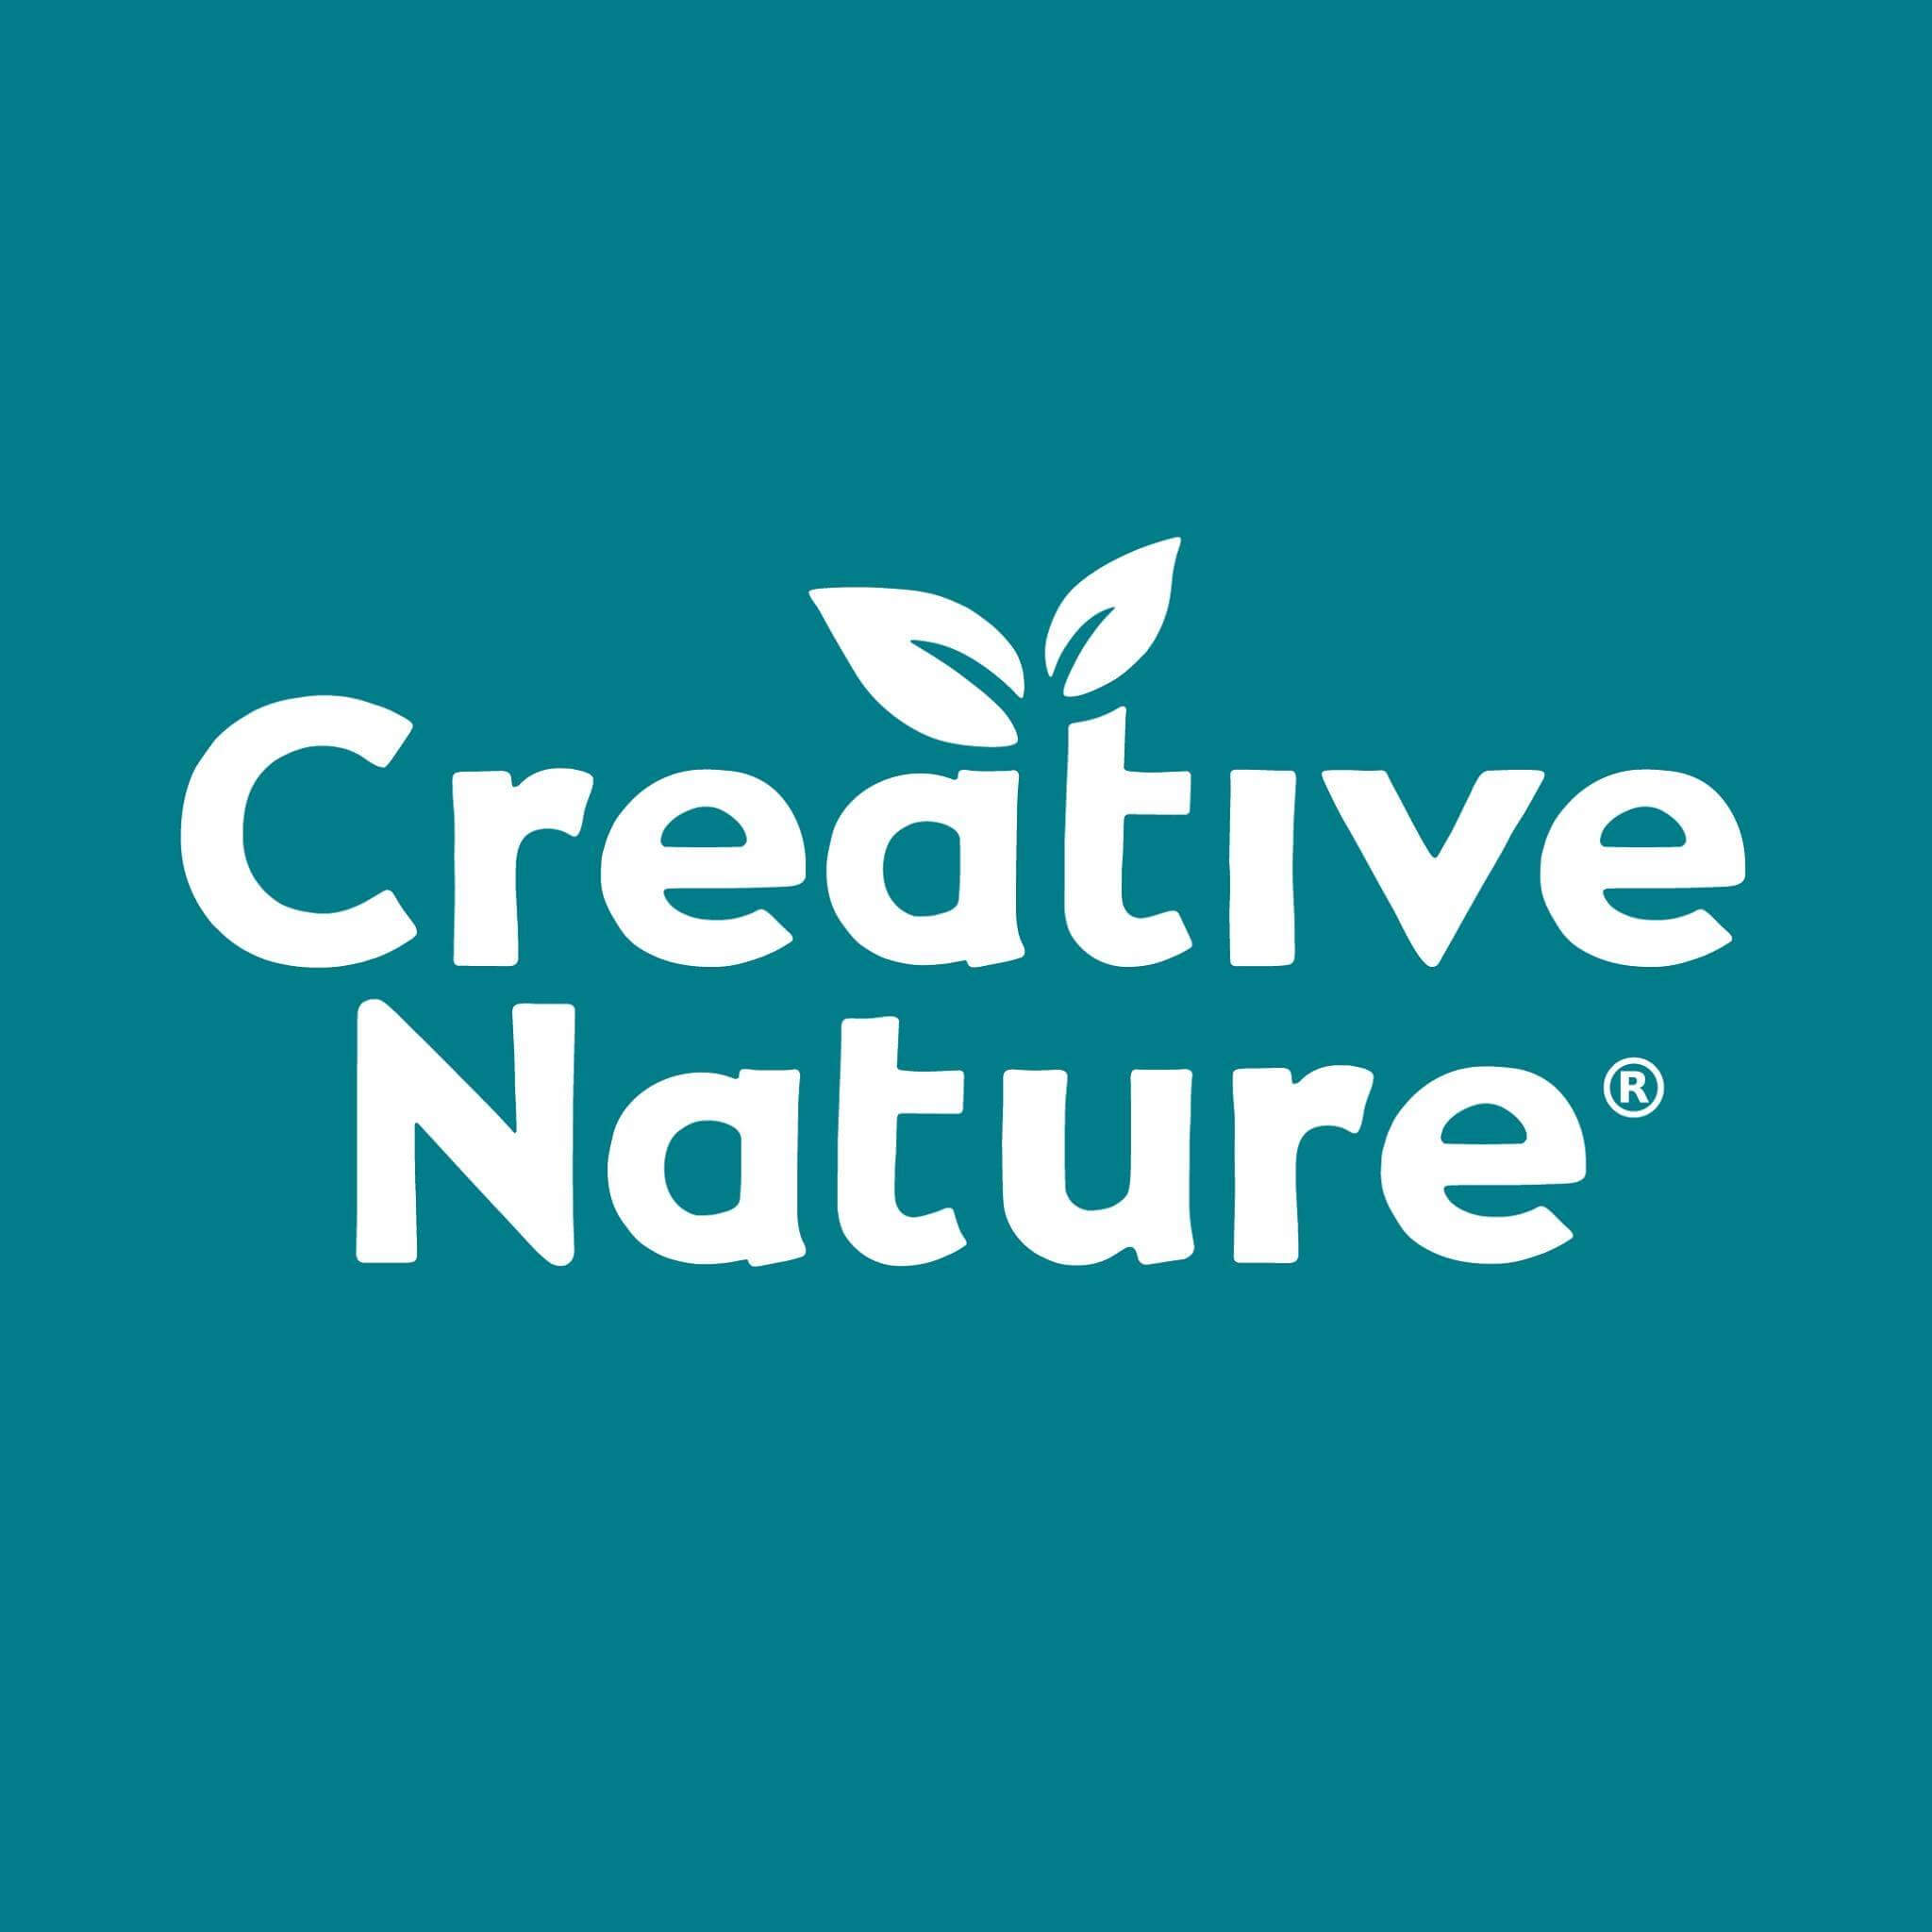 Creative Nature brand logo